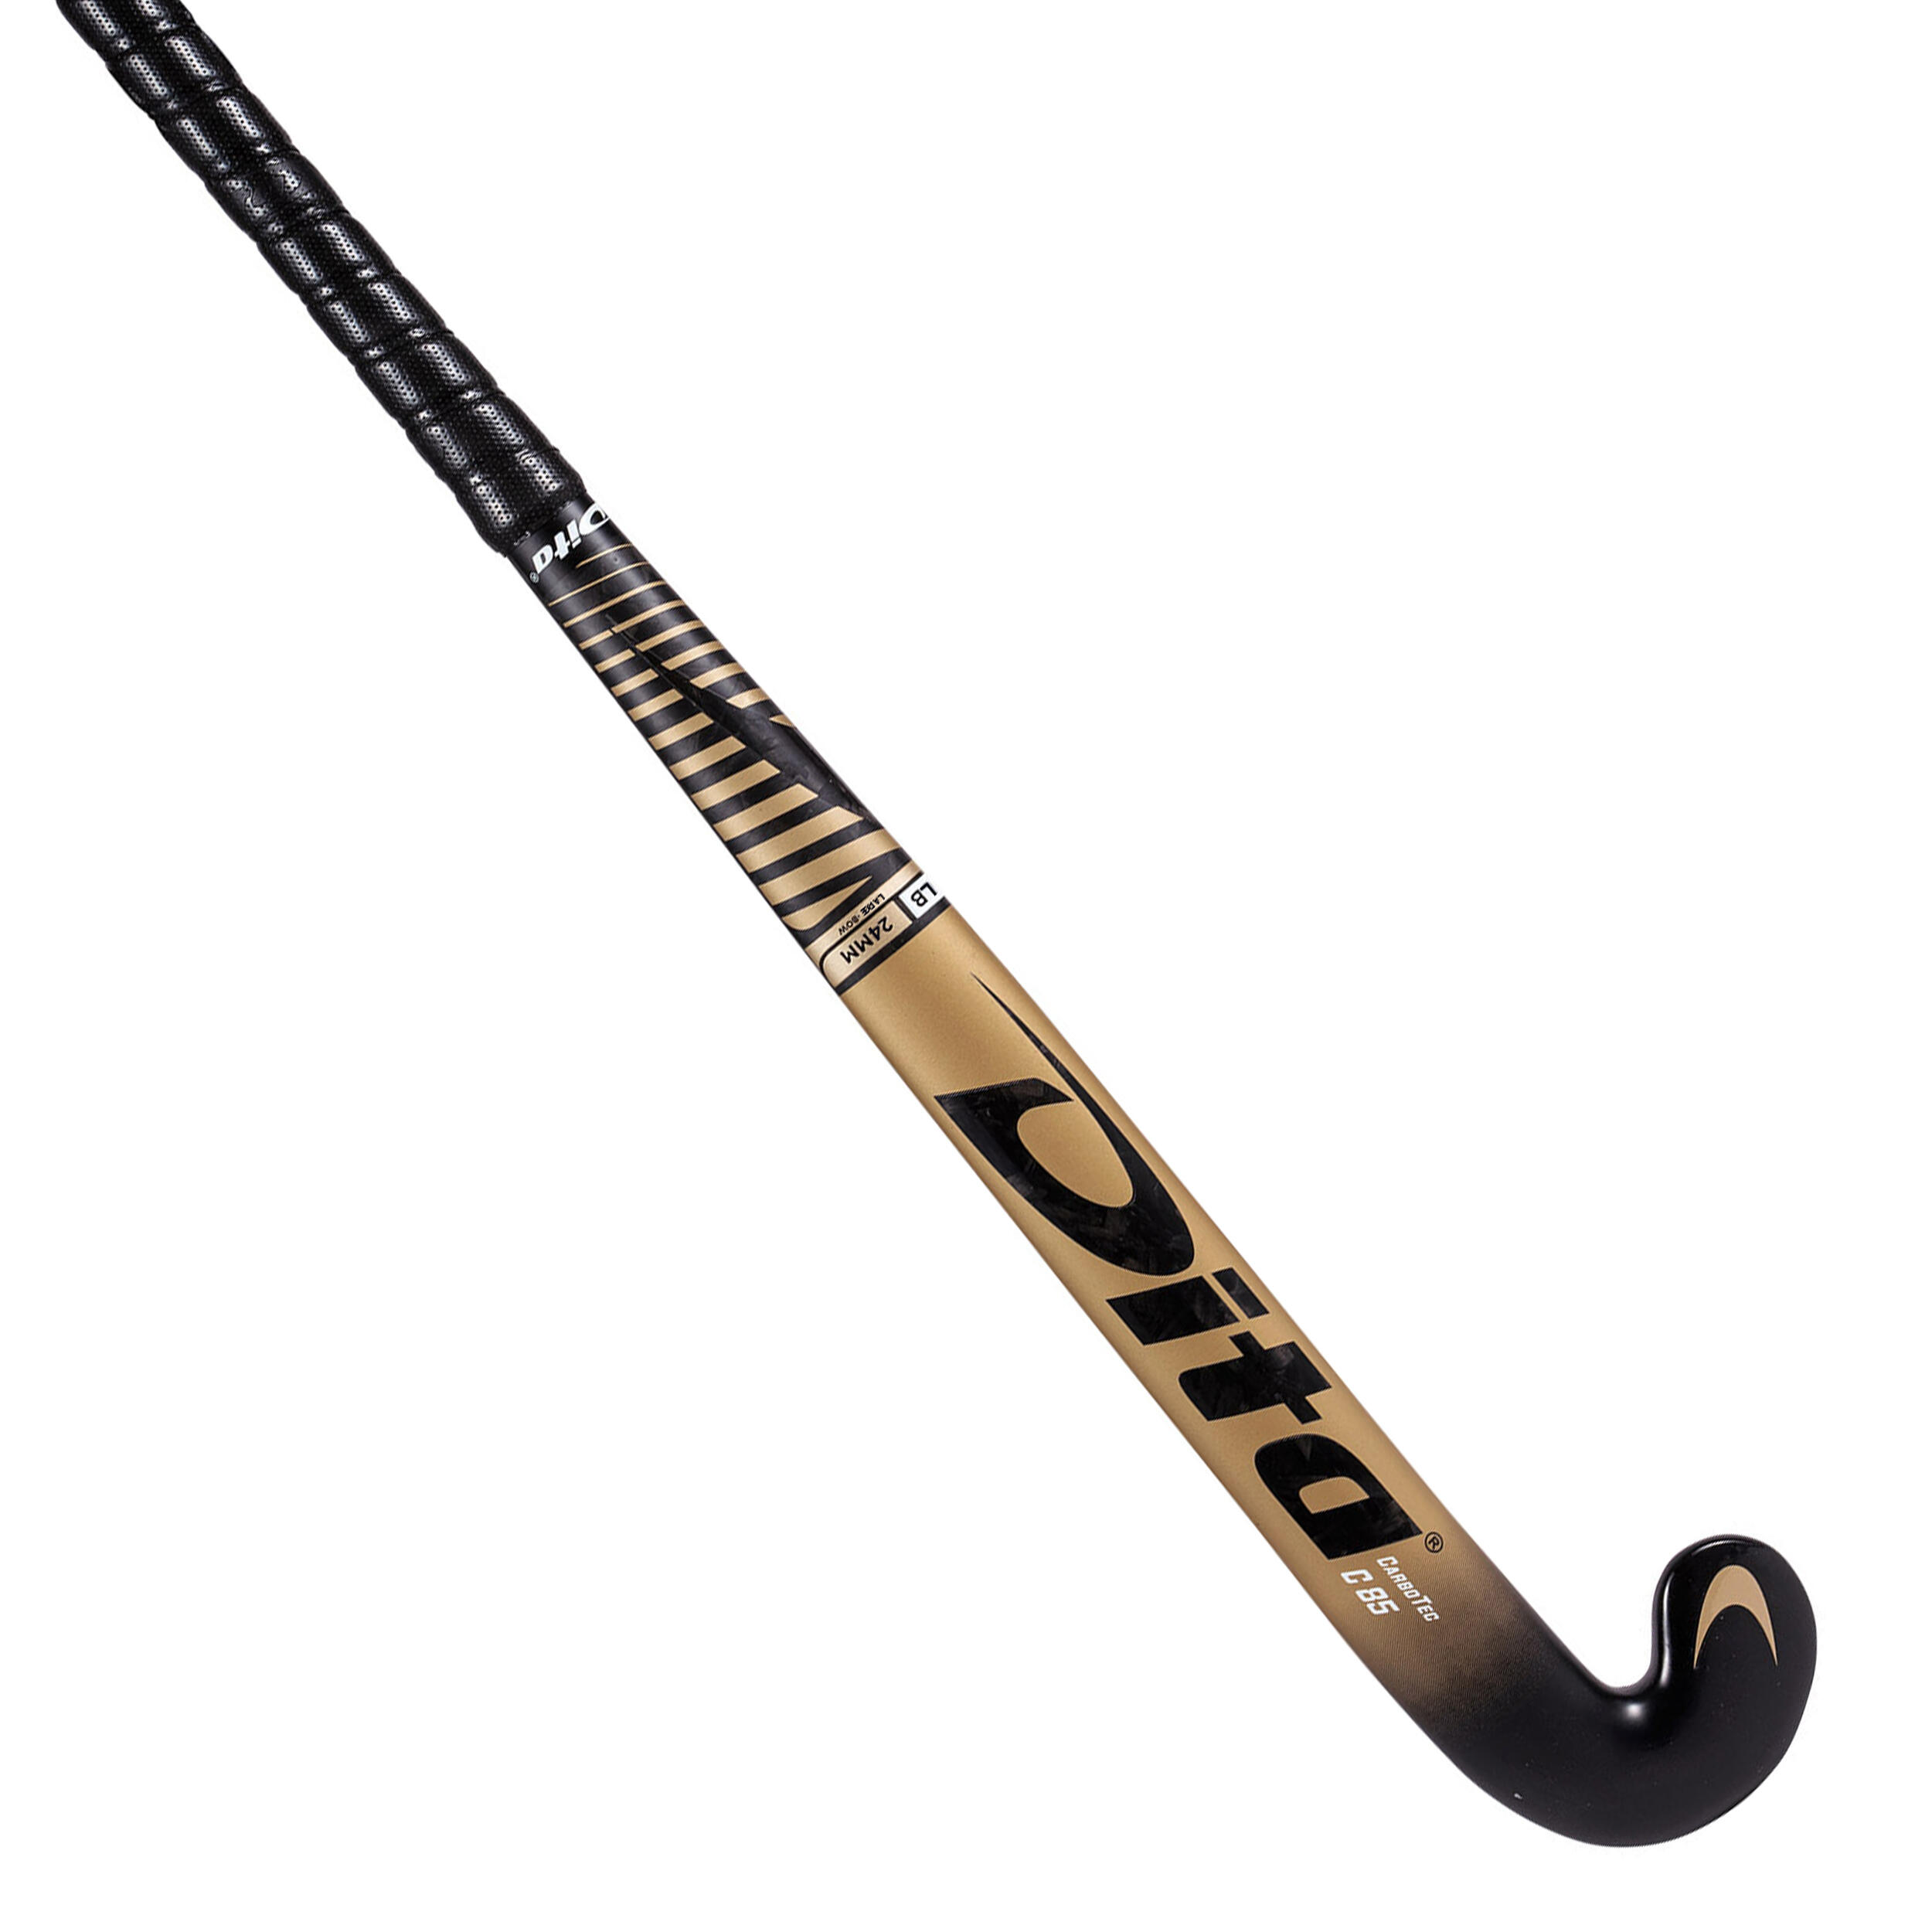 Damen/Herren Feldhockeyschläger Experten Low Bow 85 % Carbon - CarboTec C85 LB gold/schwarz